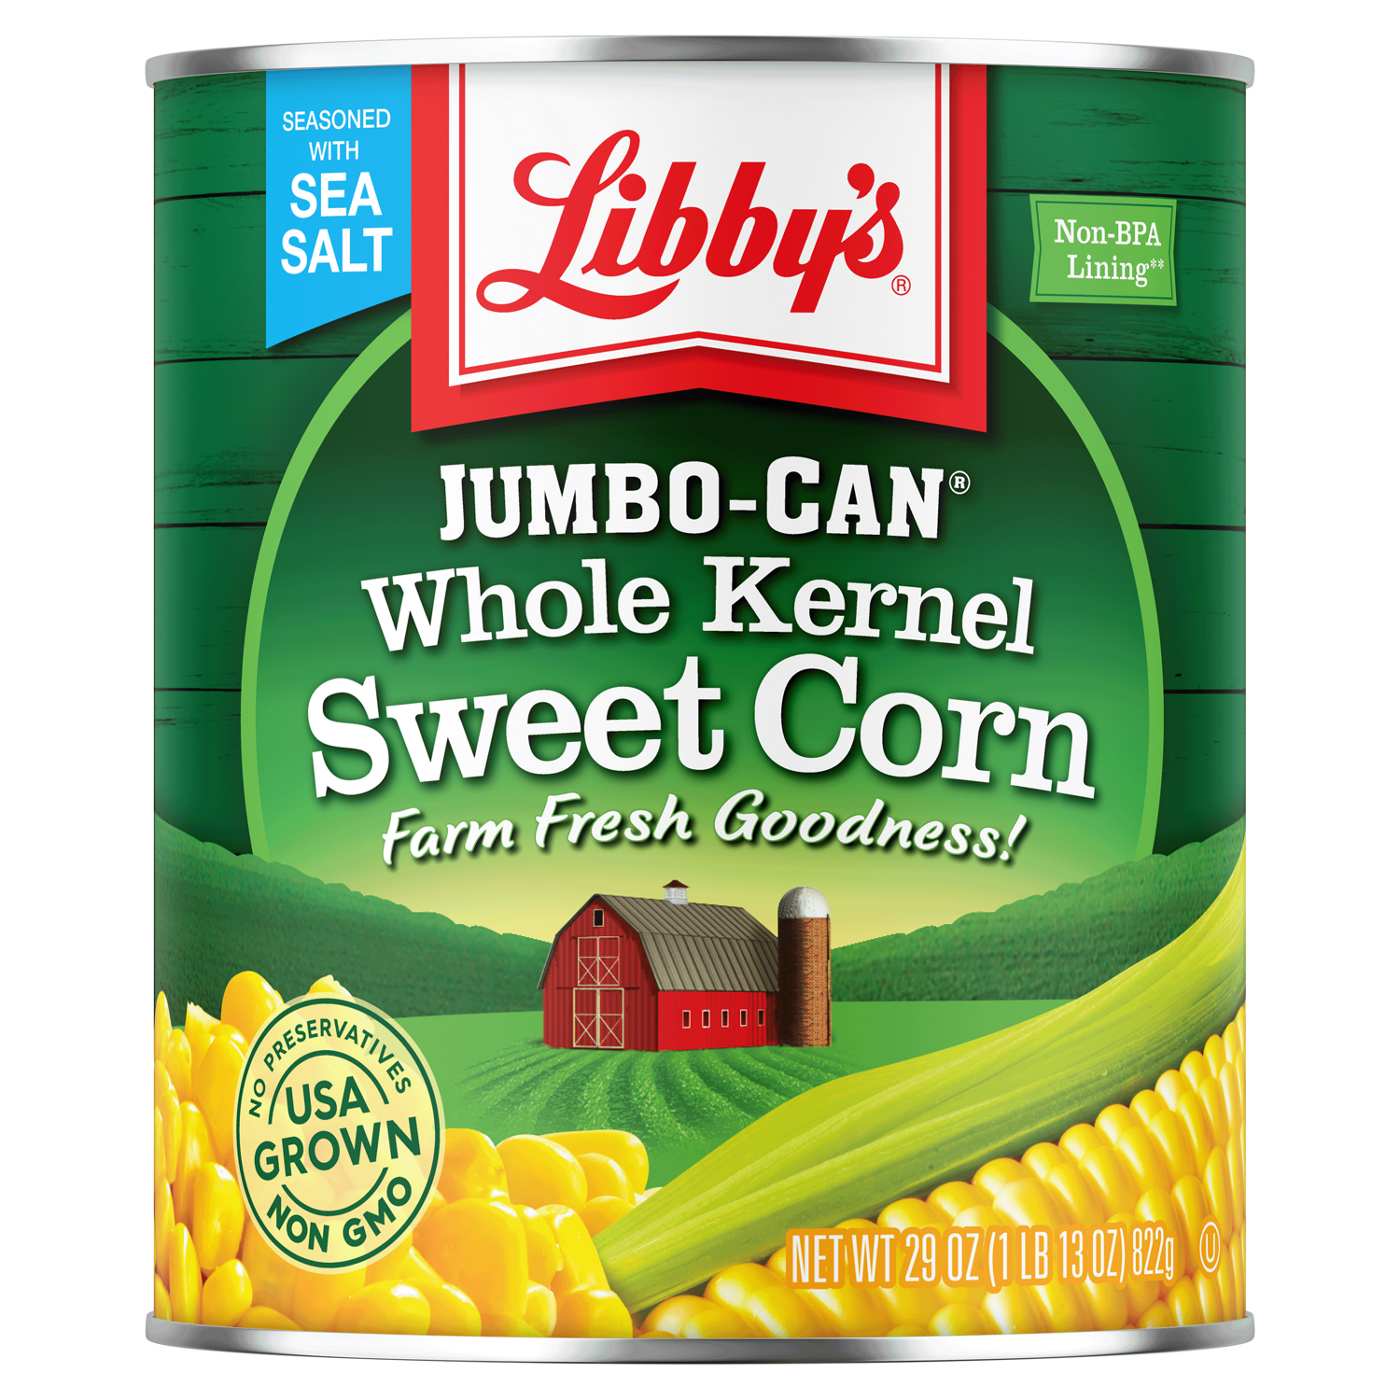 Libby's Whole Kernel Sweet Corn Jumbo-Can; image 1 of 4